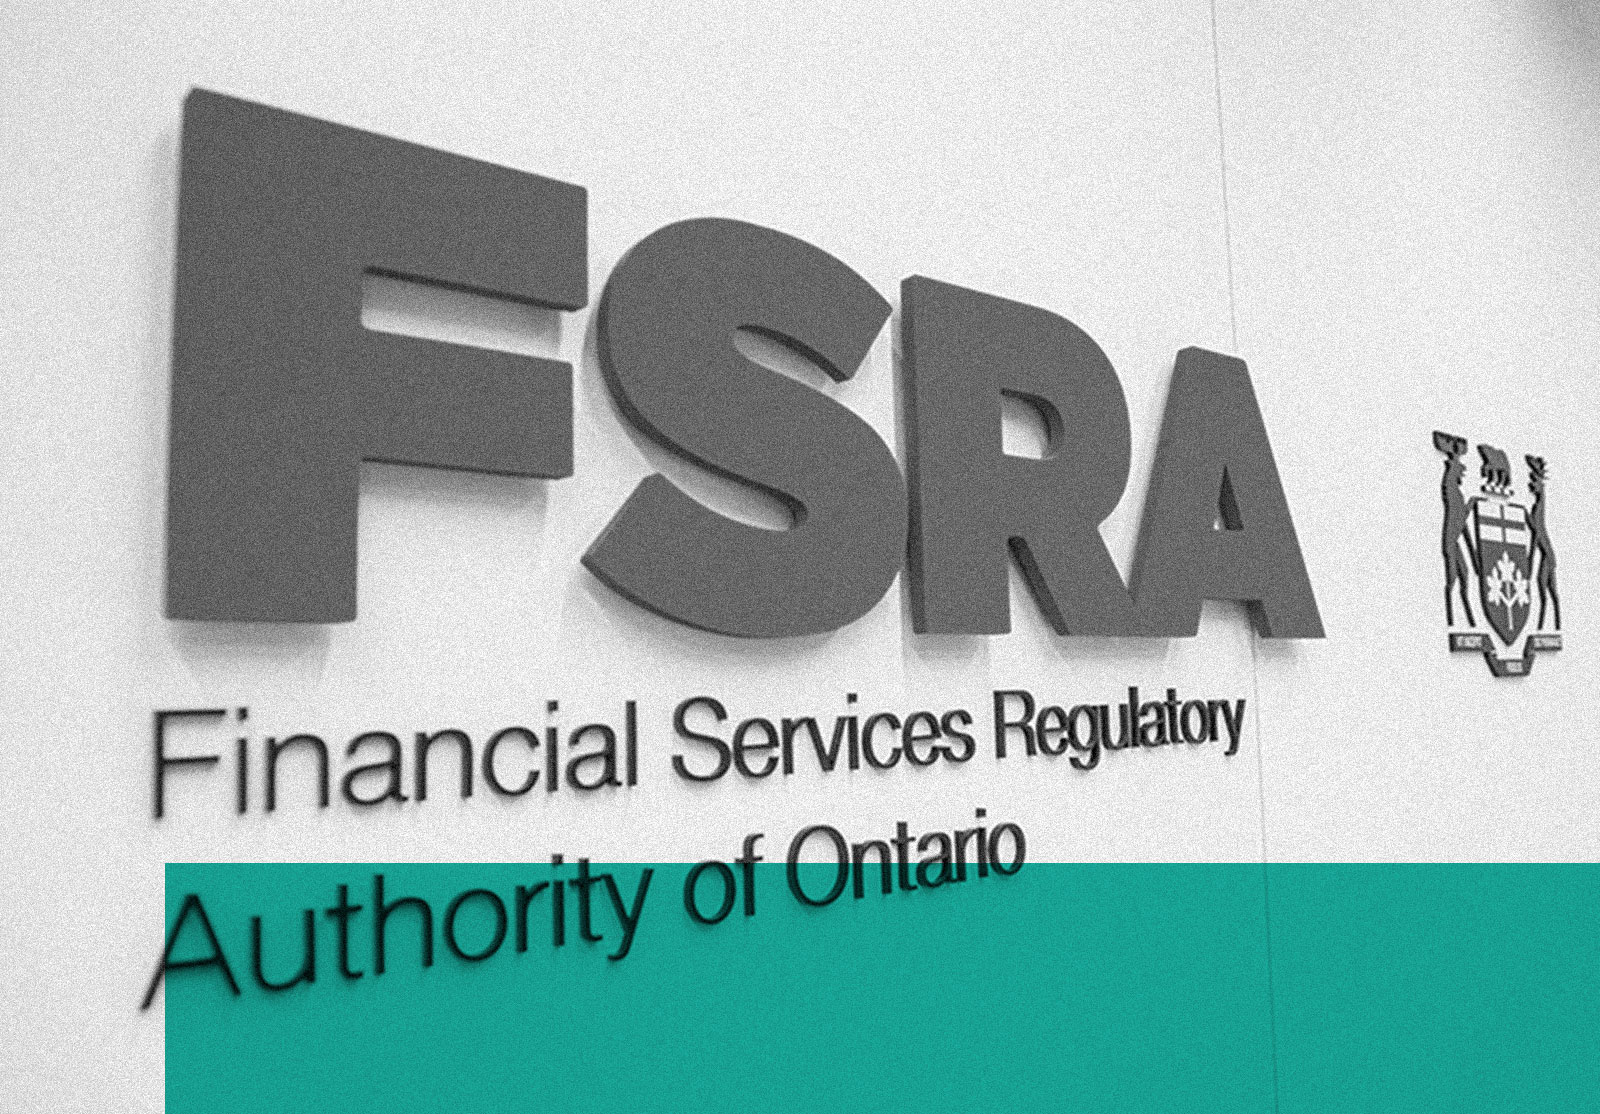 FSRA Logo in entrance